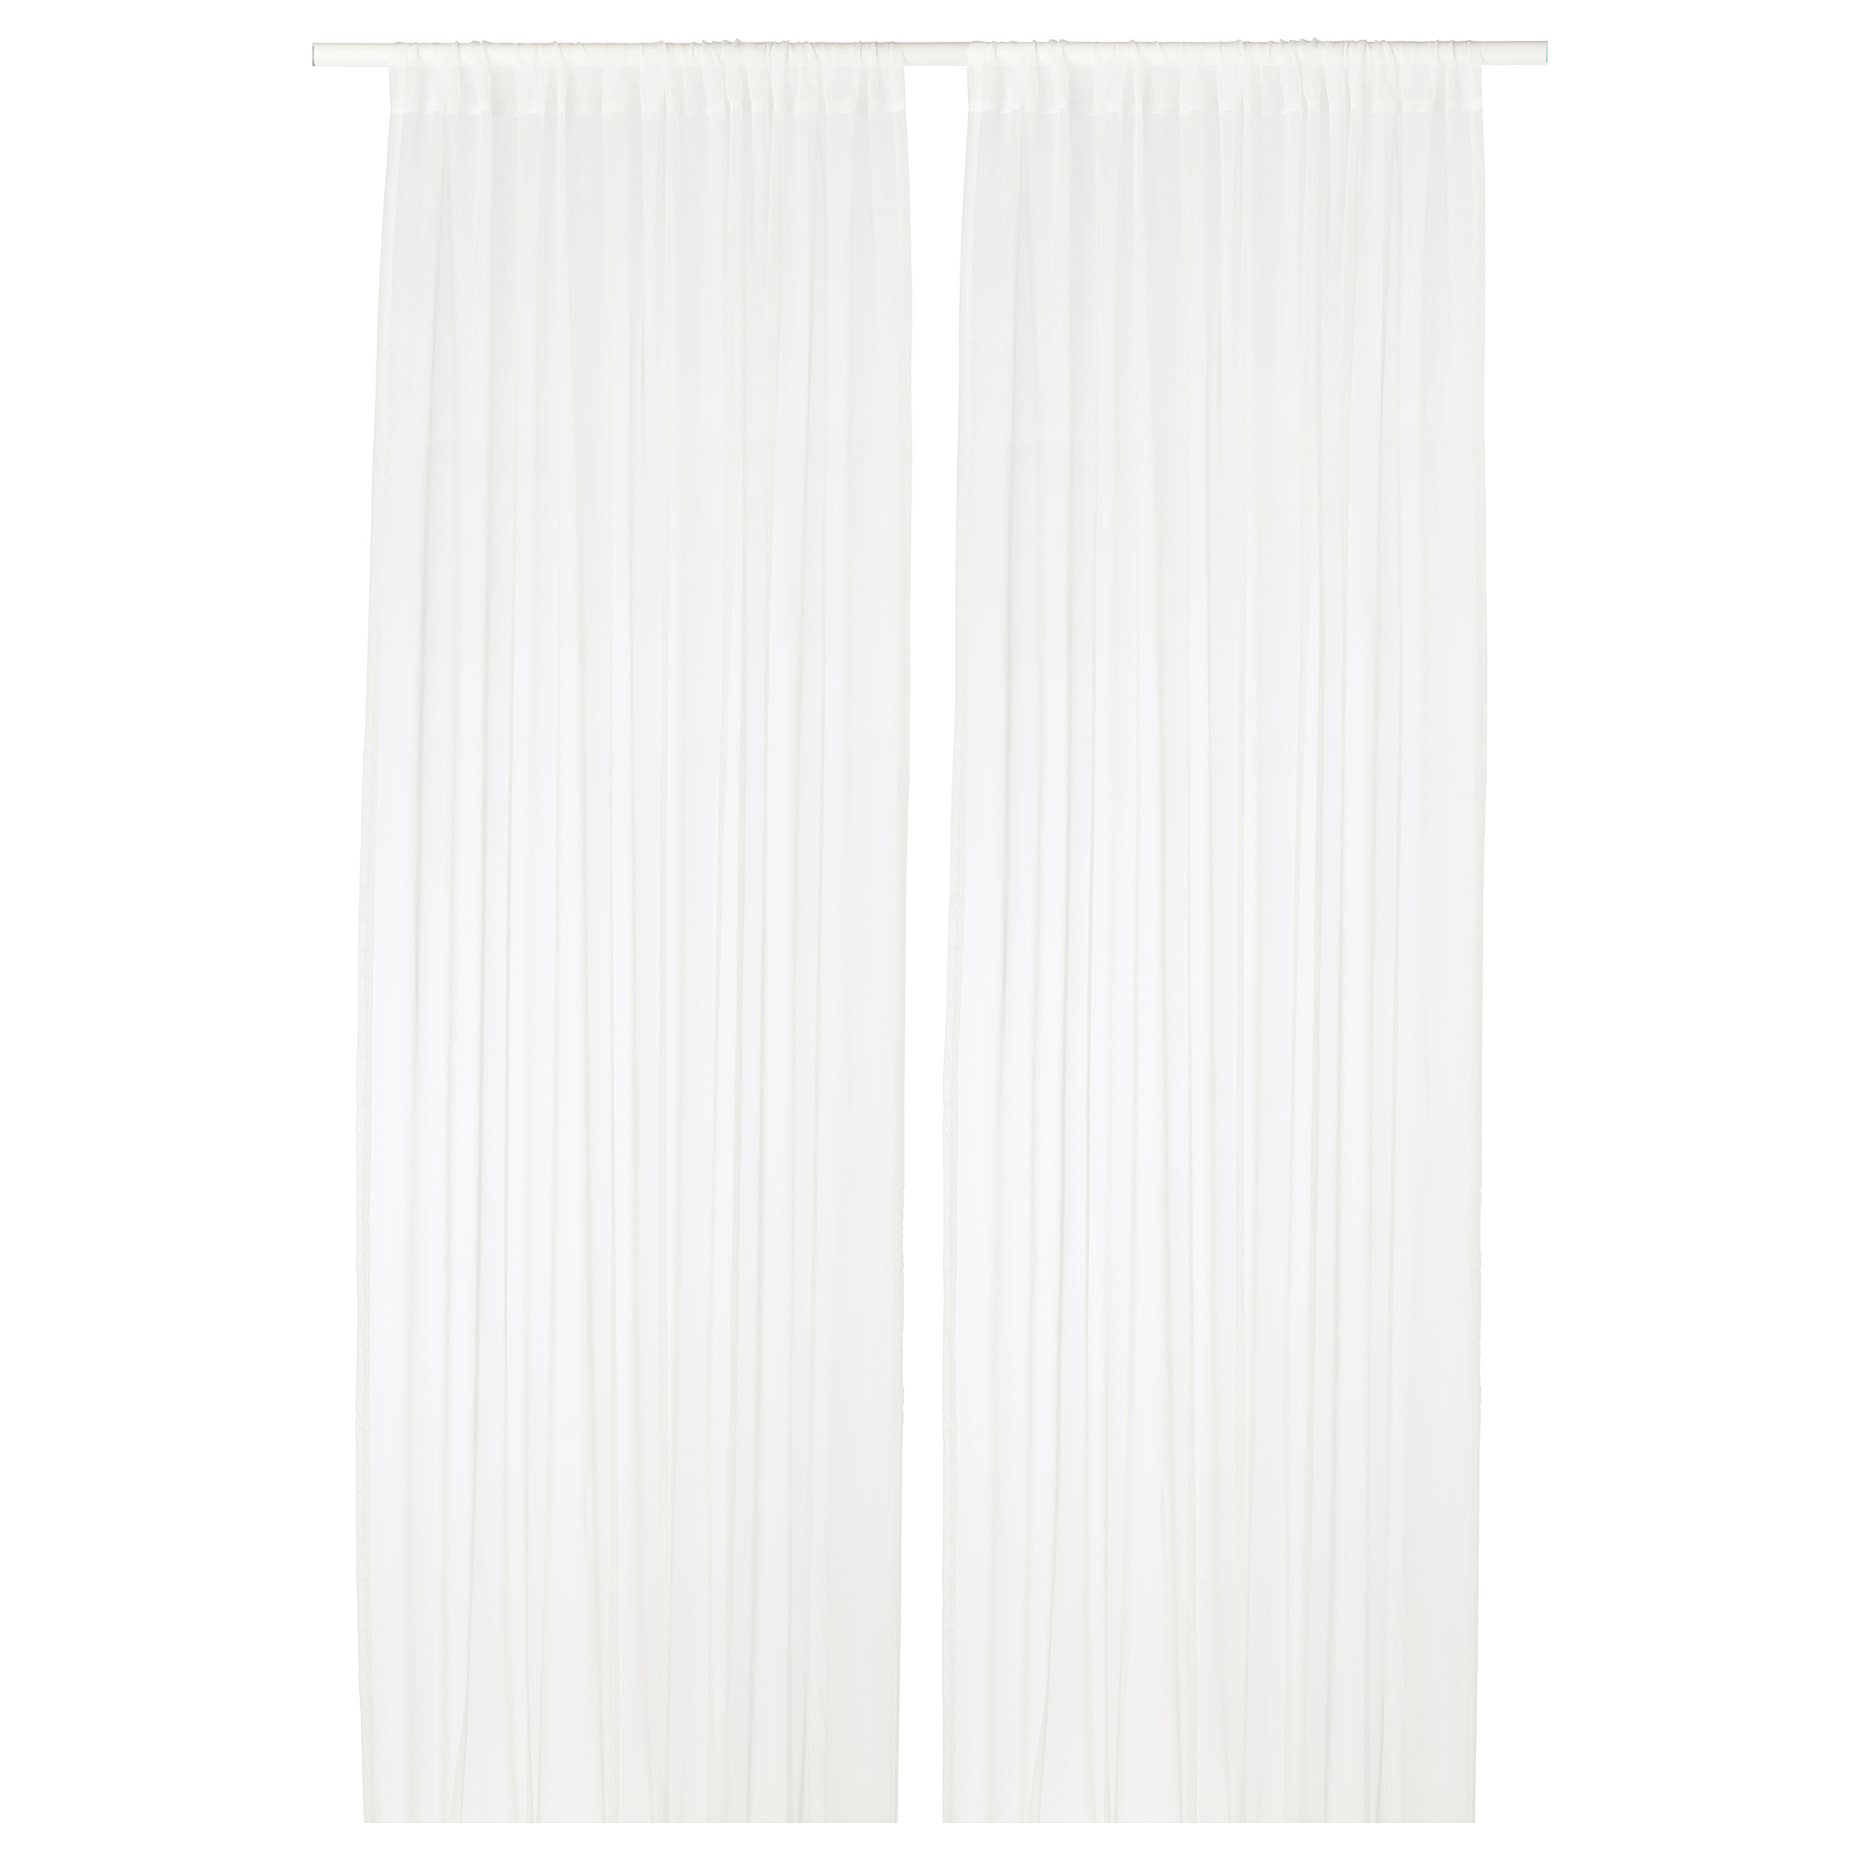 TERESIA, sheer curtains, 1 pair, 502.323.33